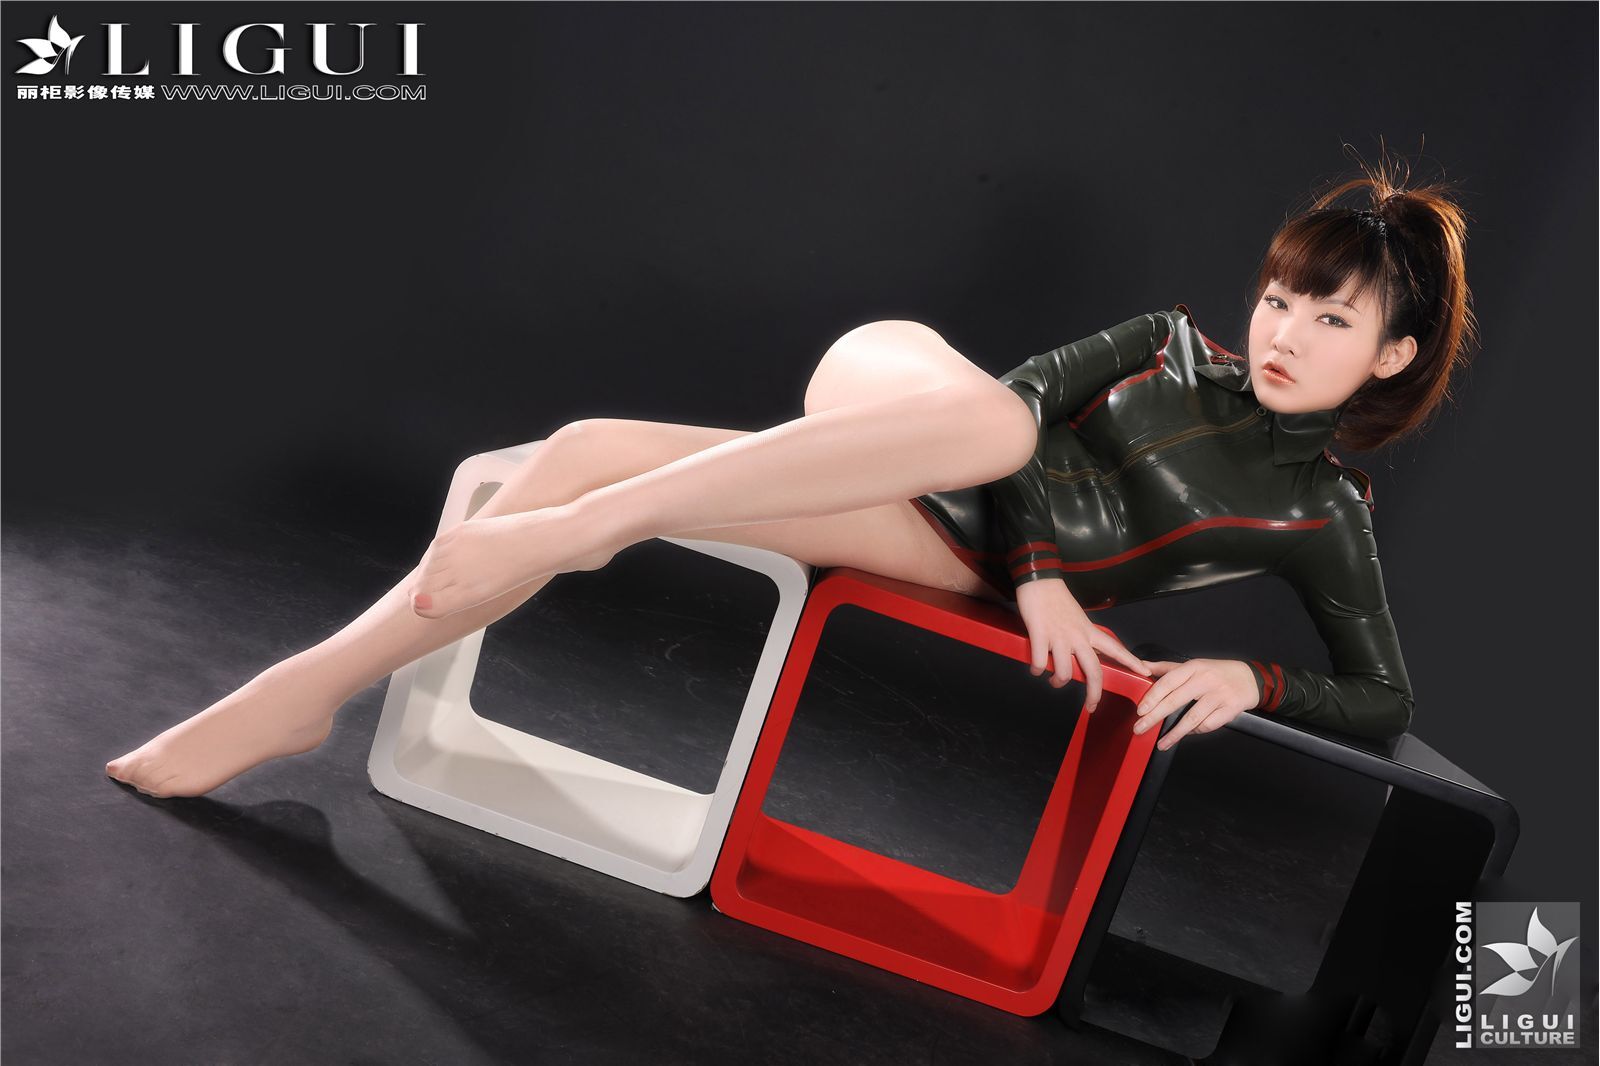 [ligui] new sexy women's military uniform on December 30, 2011 (Part 1) - model quiet